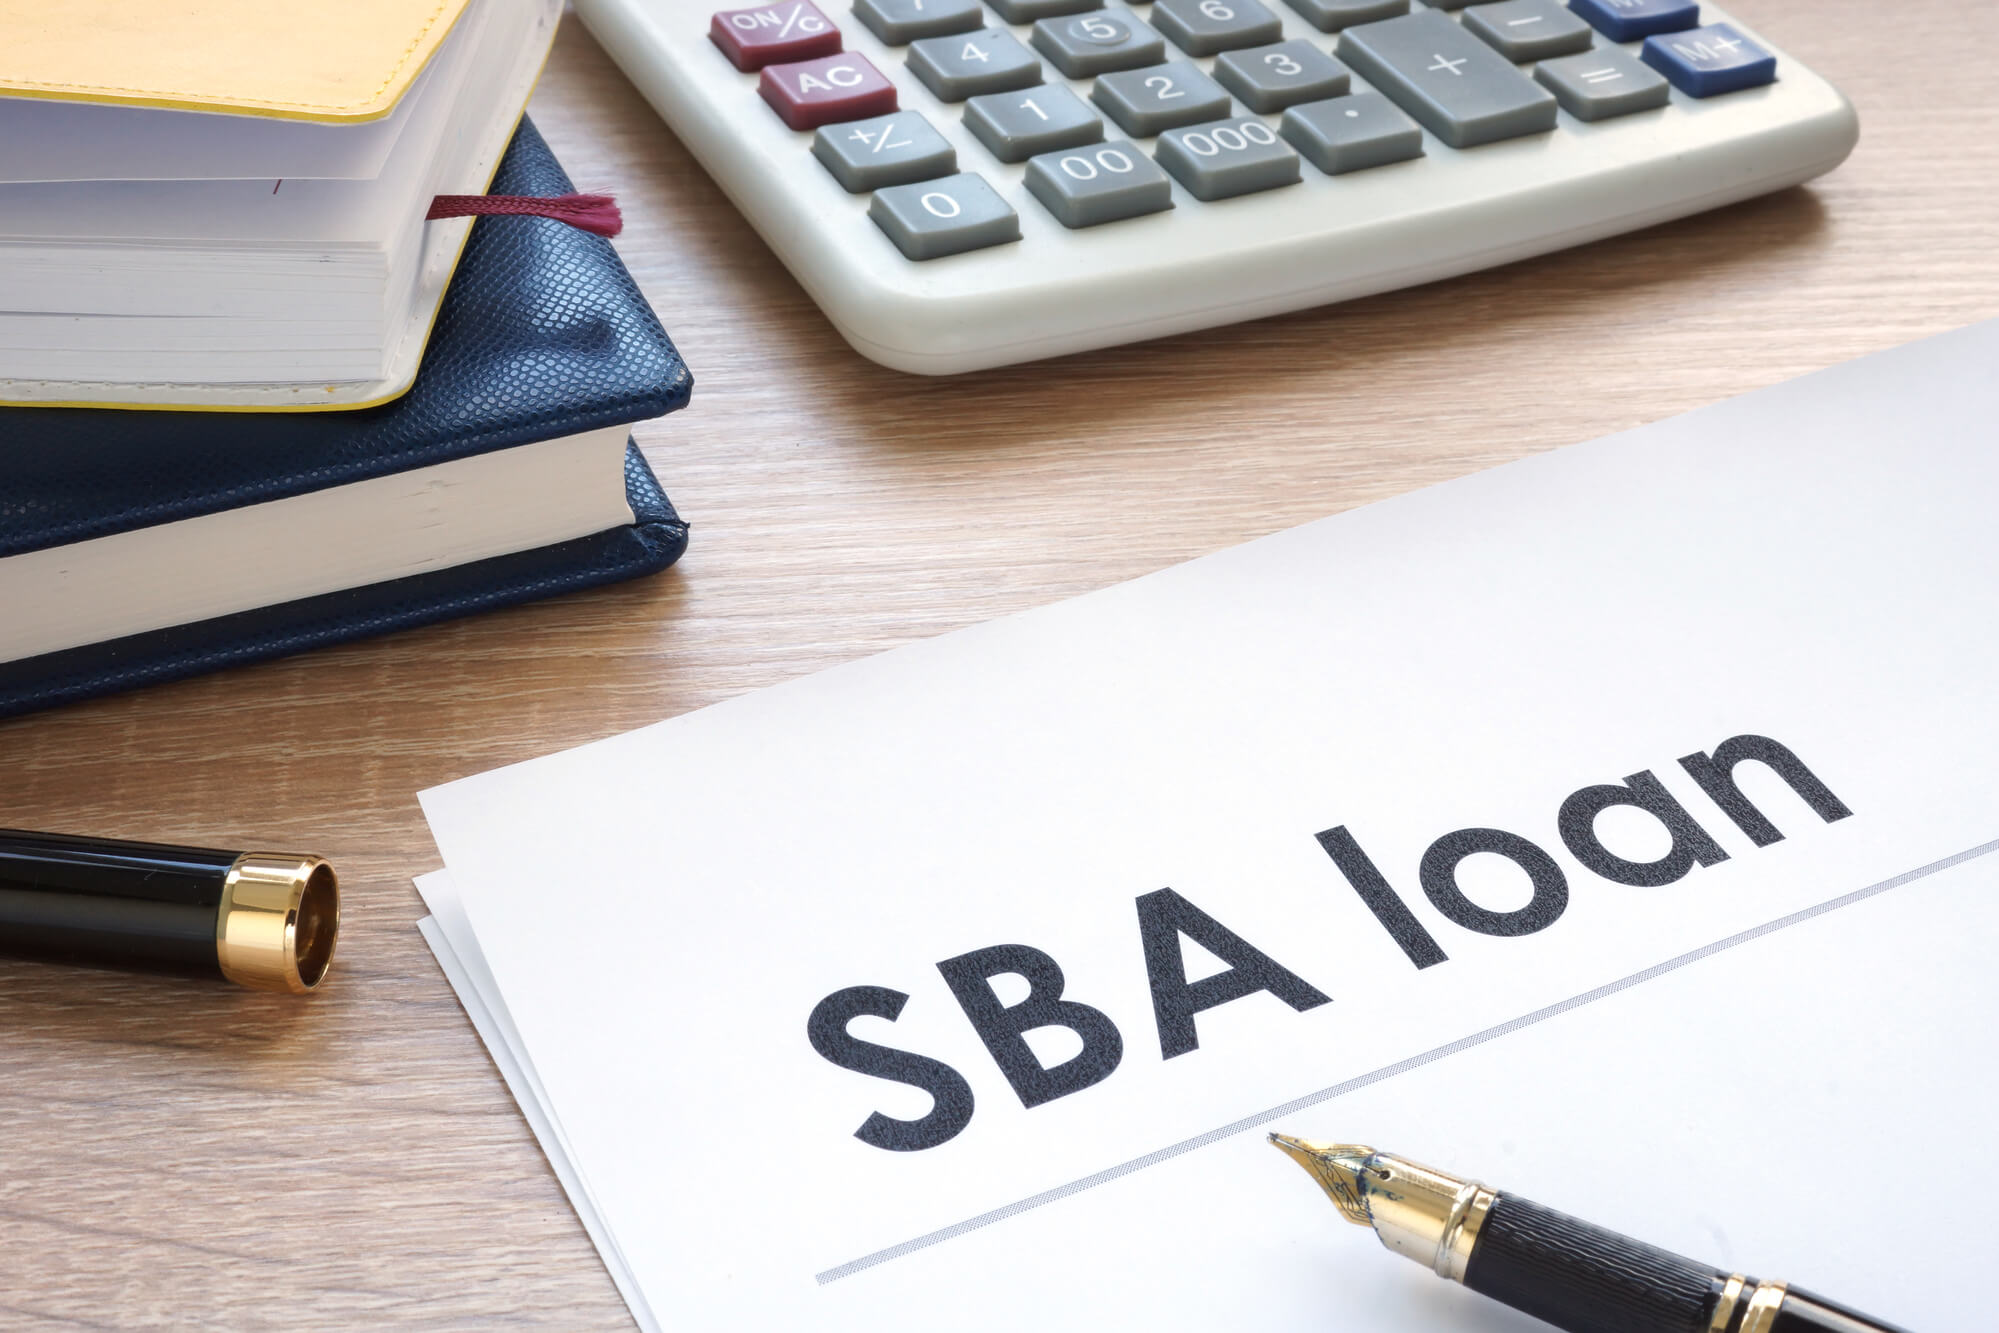 sba loan form on table